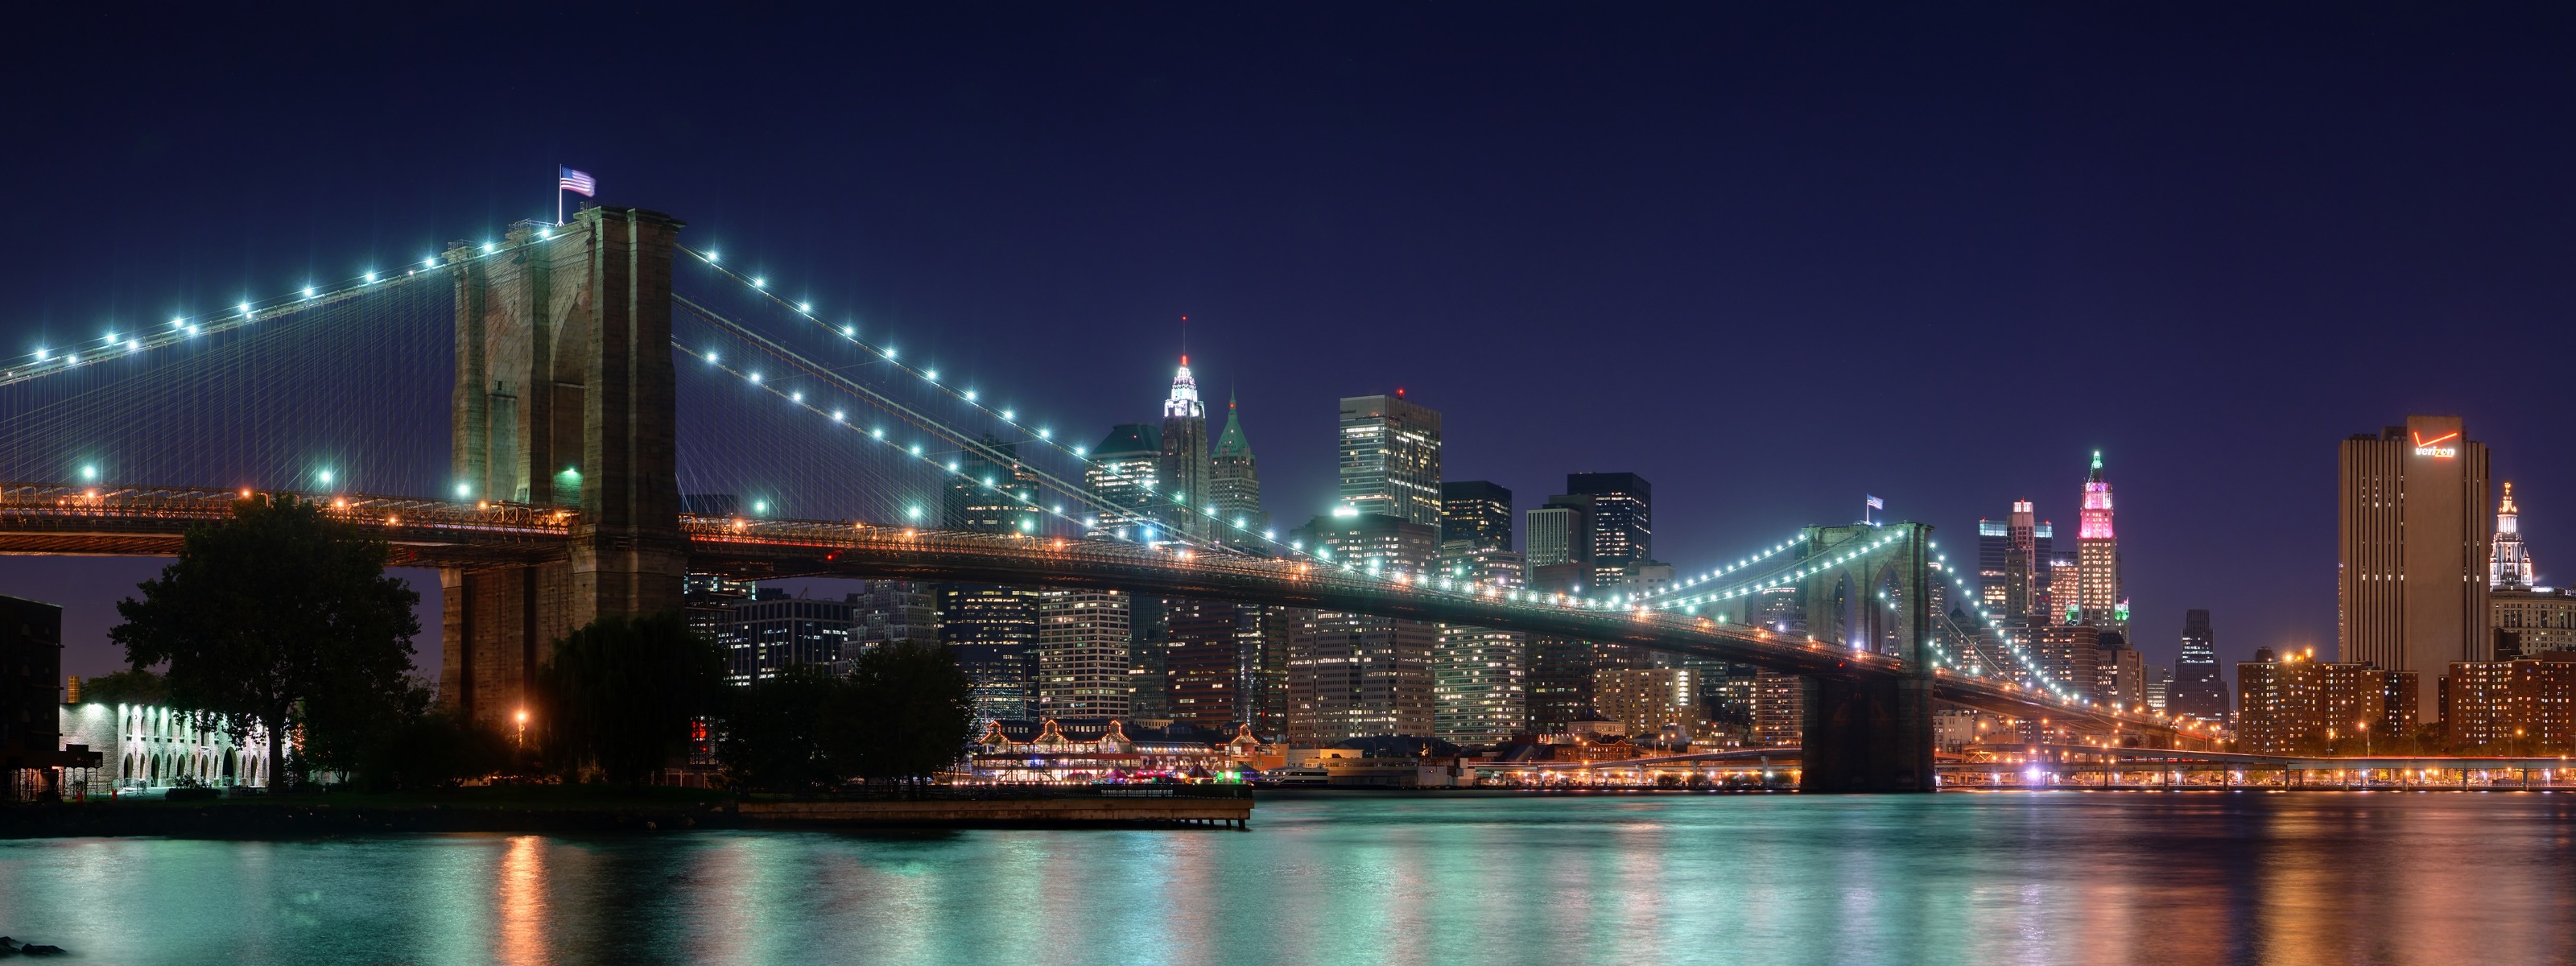 Brooklyn Bridge Desktop Wallpaper For HD Widescreen And